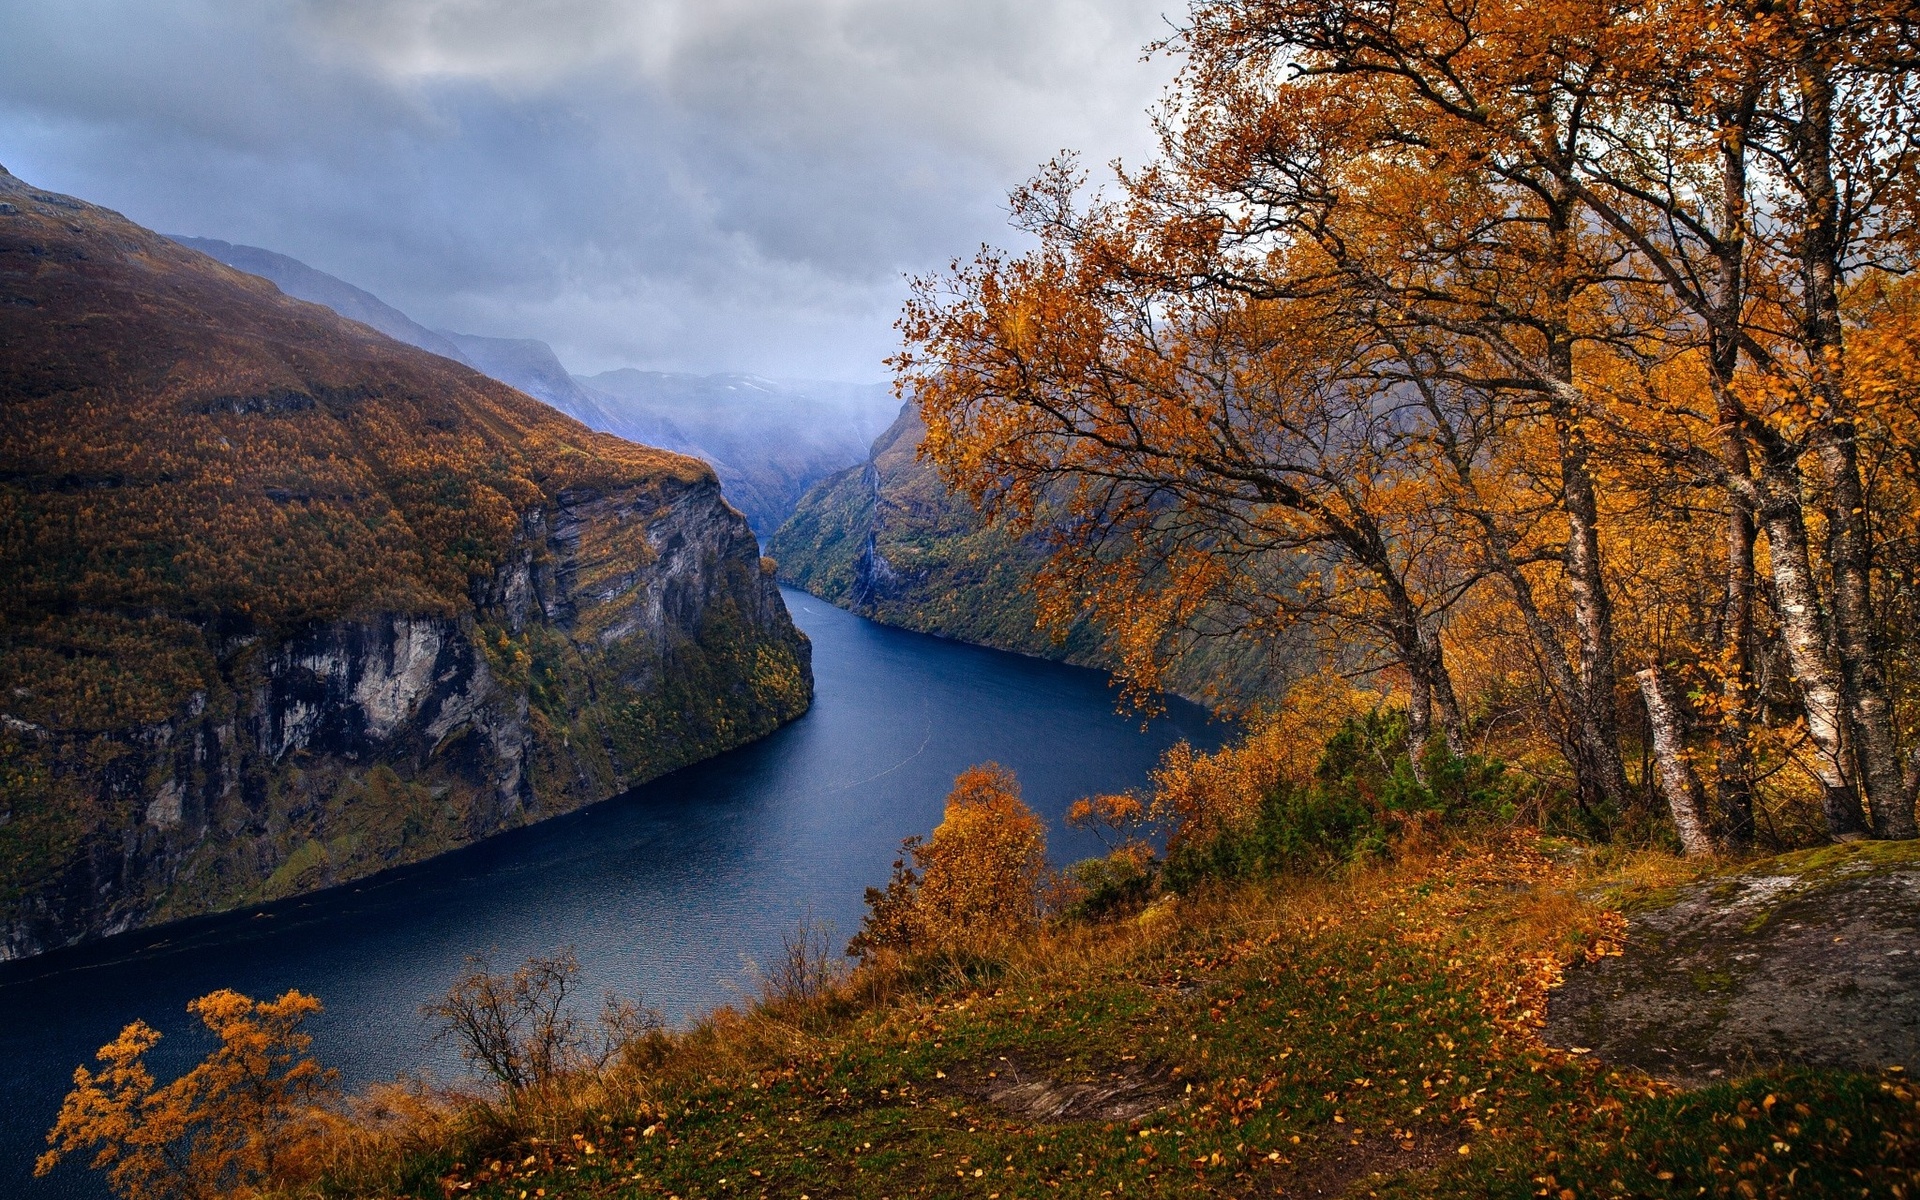 798731 descargar imagen tierra/naturaleza, fiordo, otoño, montaña, árbol: fondos de pantalla y protectores de pantalla gratis